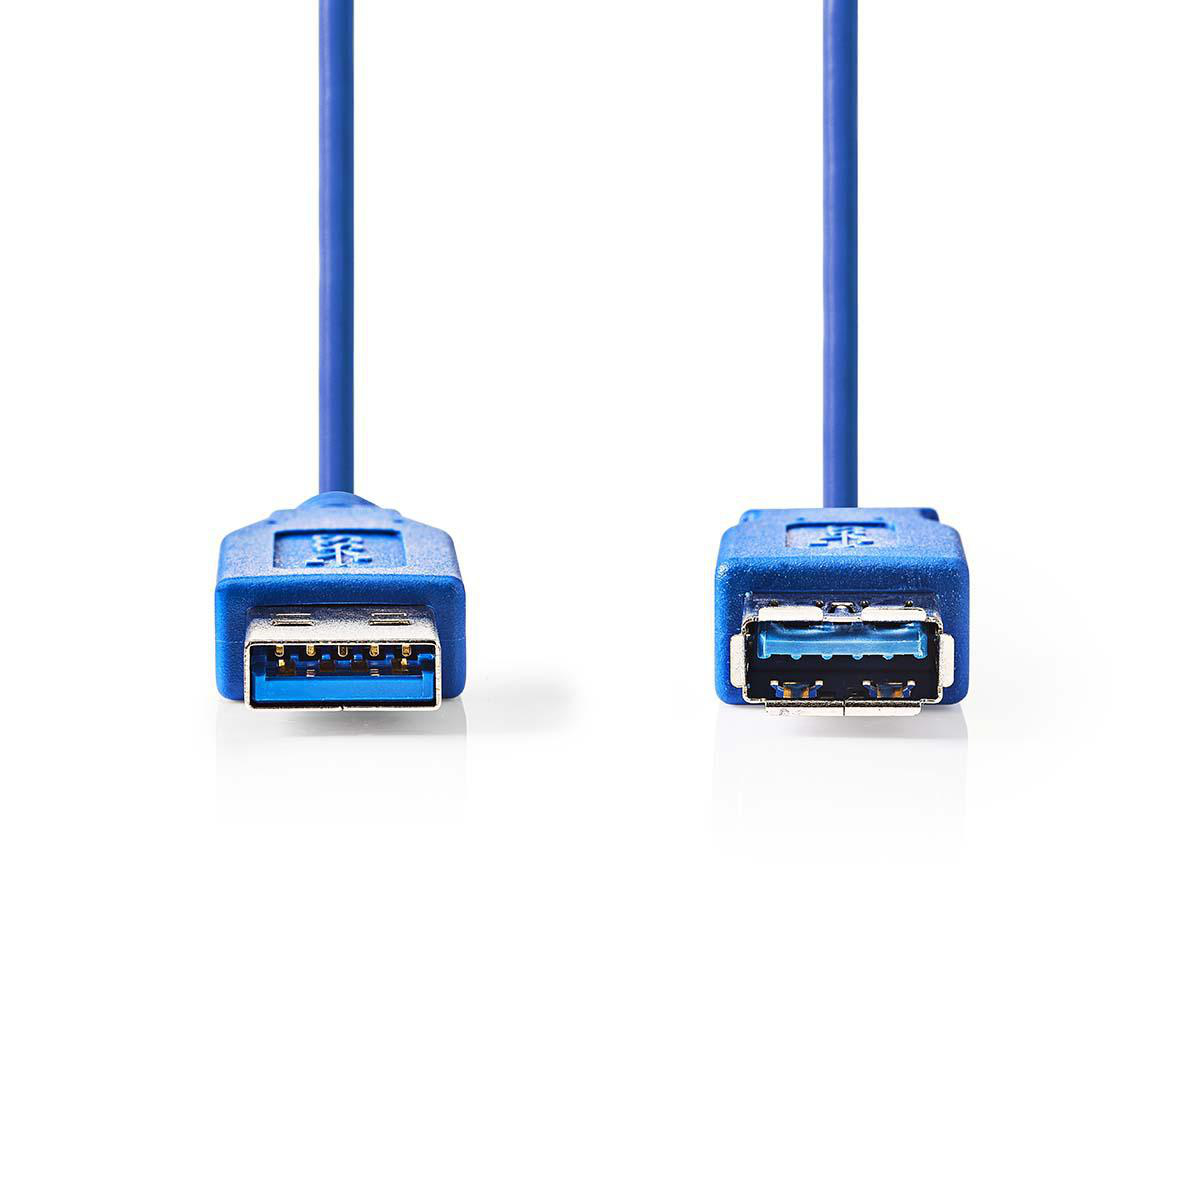 Nedis prodlužovací kabel USB 3.0 zástrčka USB A - zásuvka USB A, 3 m, modrá (CCGP61010BU30)